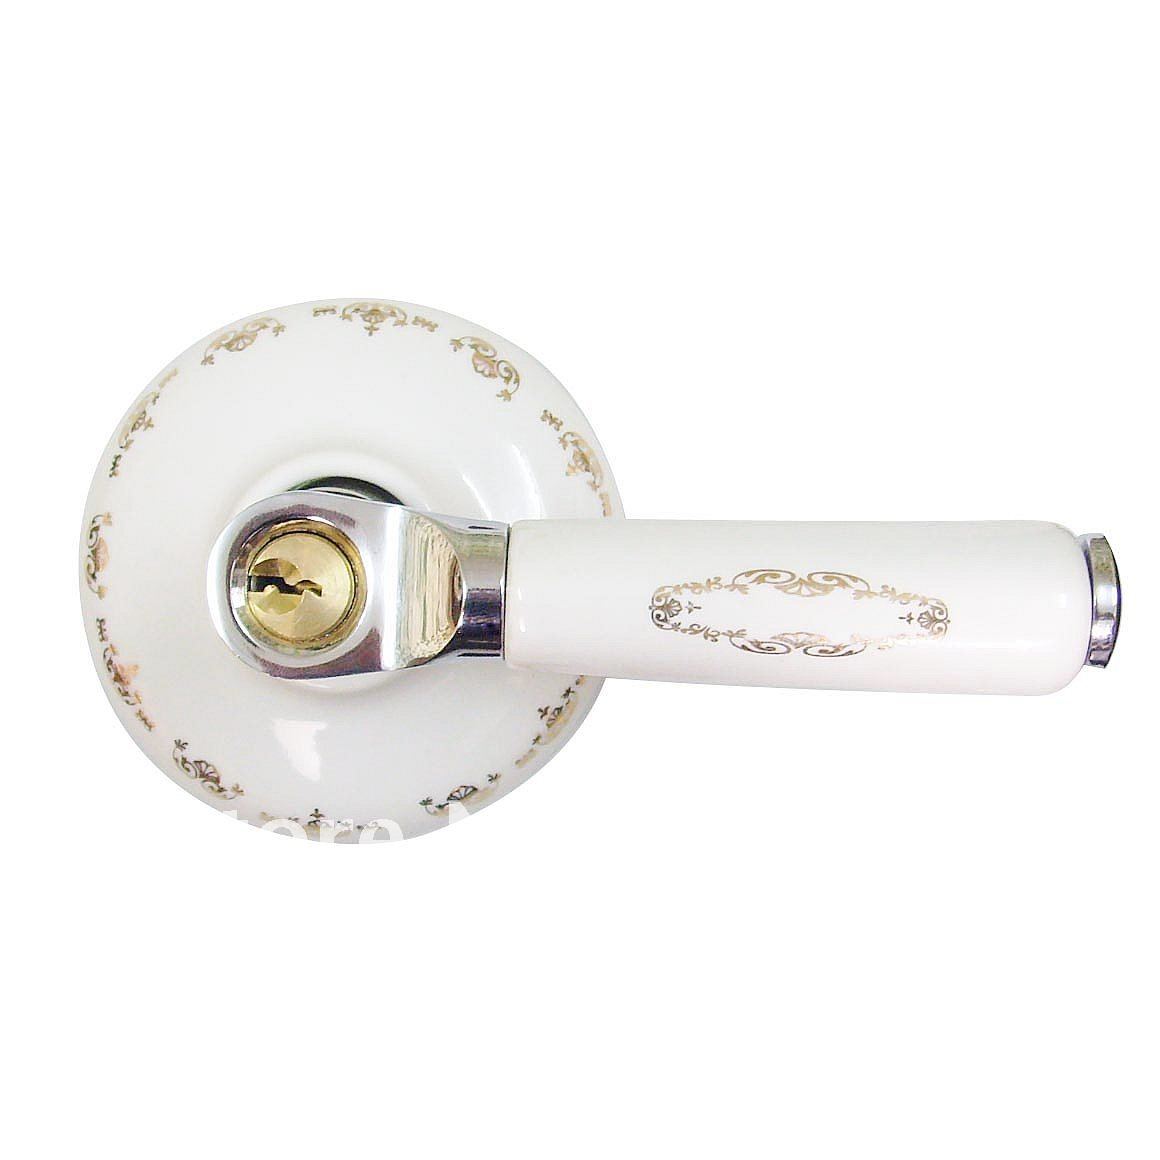 - ceramic handle door lock with stainless steel body brass cylinder replacement livingroom security lock